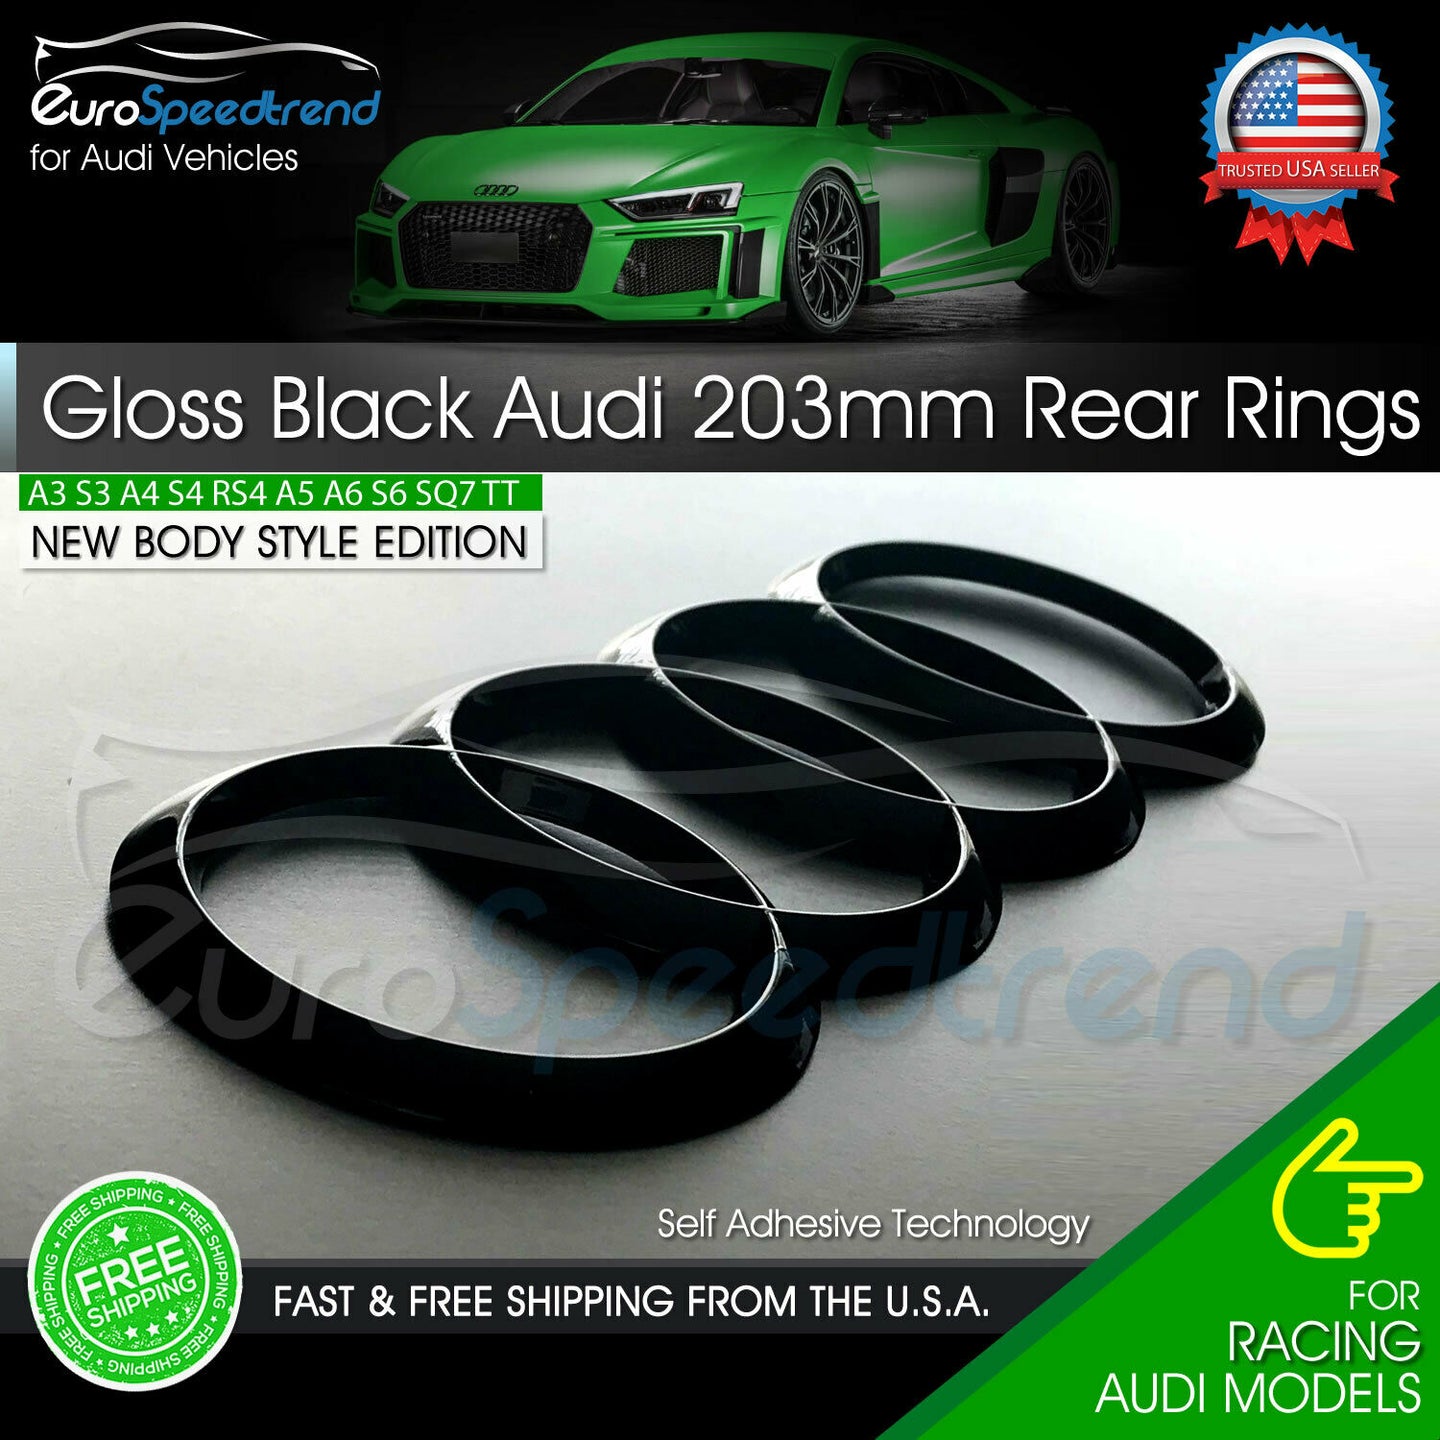 AUDI Rear Rings Gloss Black 203mm Trunk Lid Emblem Badge Logo A4 S4 A5 S6 A6 Q5